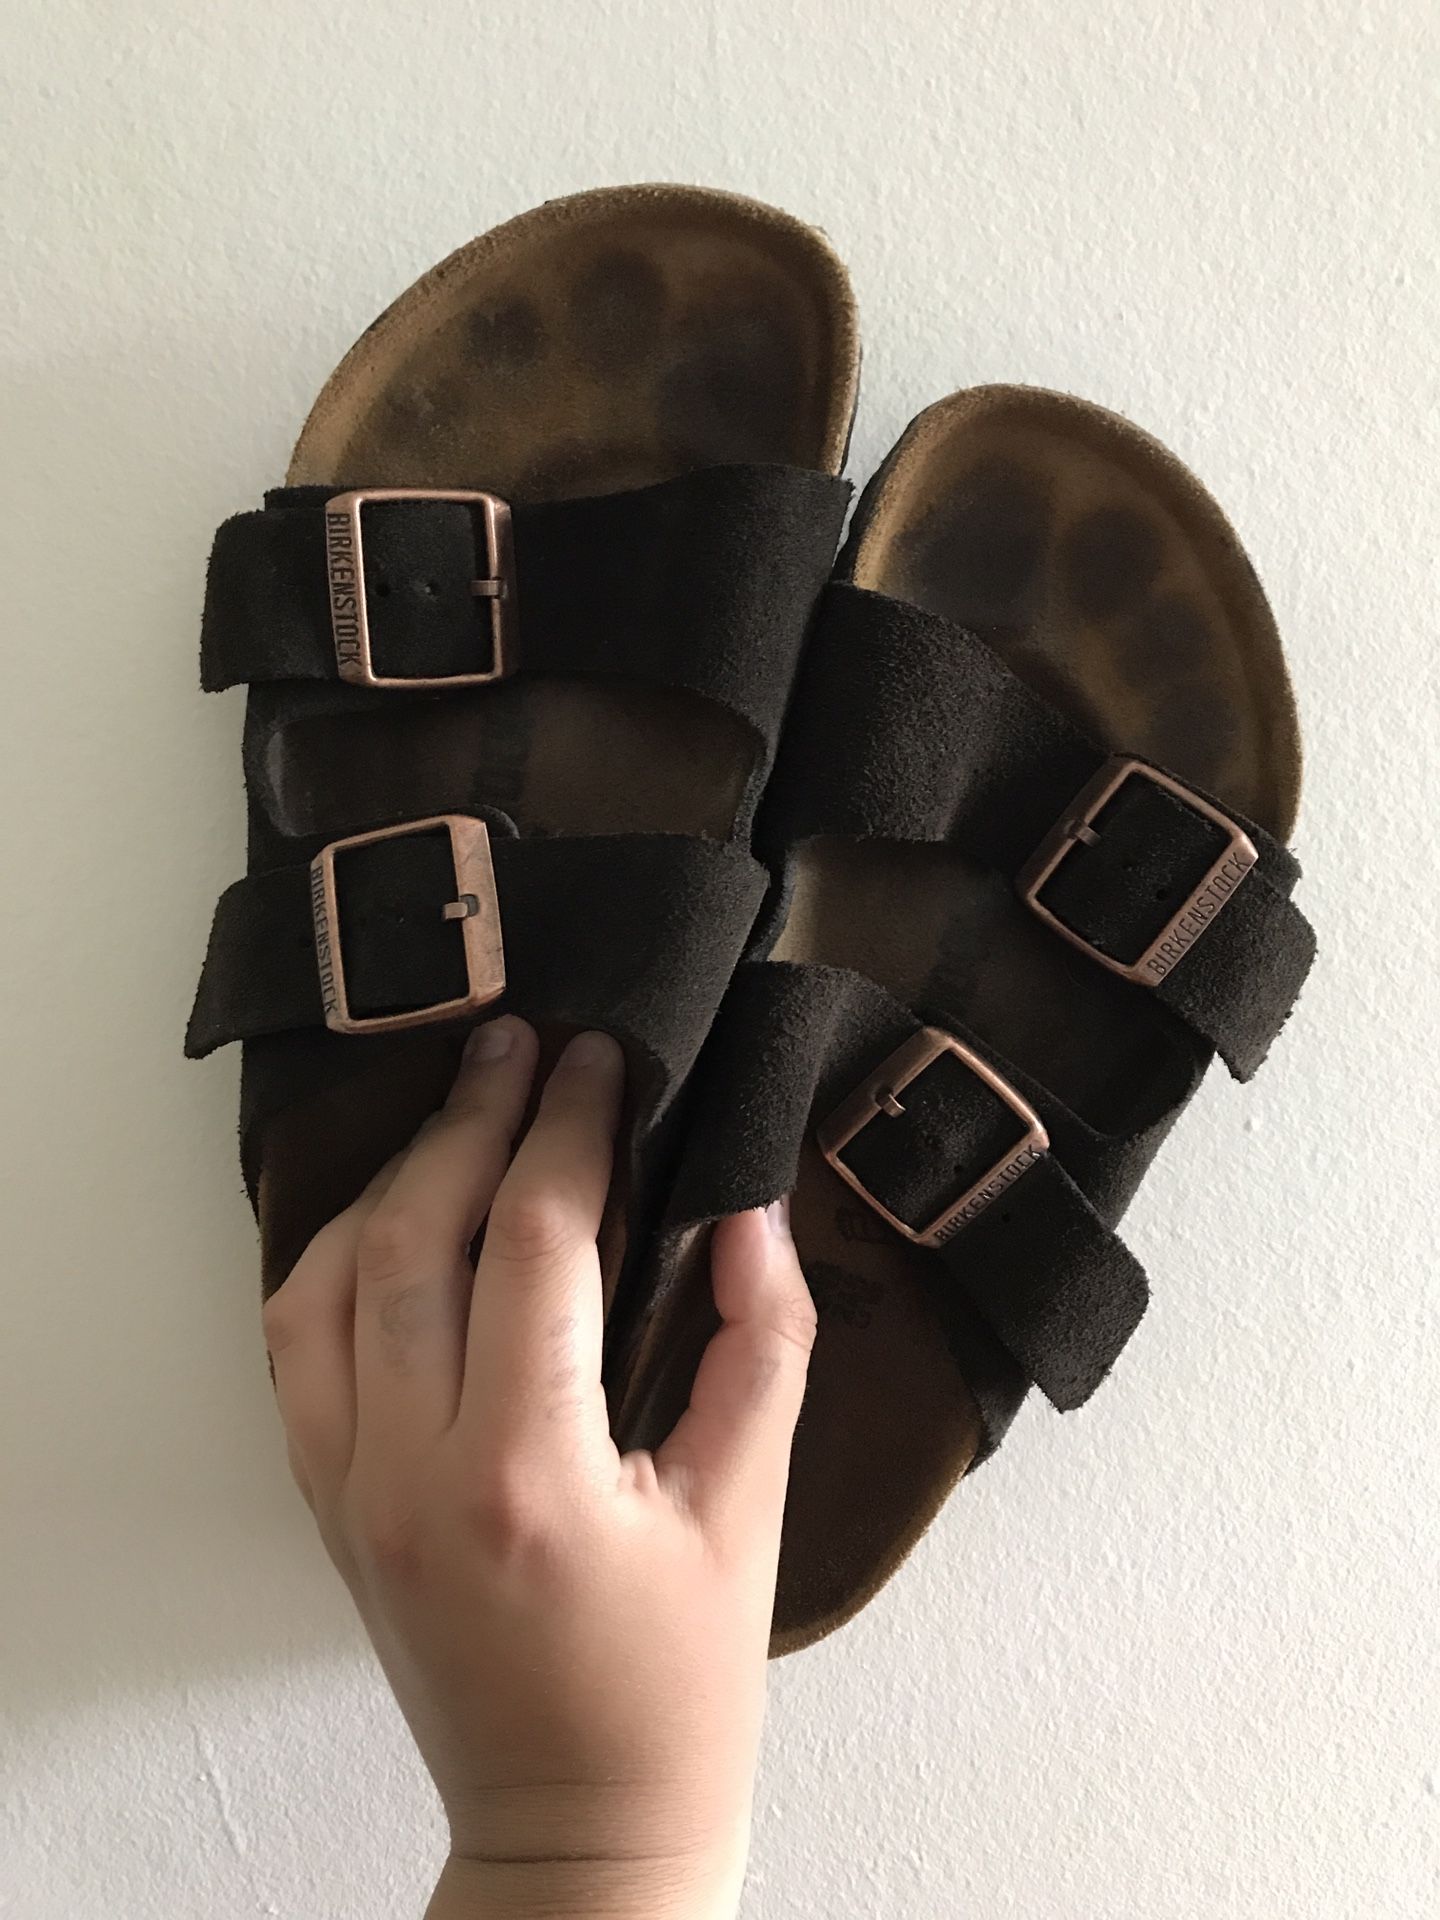 Birkenstocks - women's brown size 38 (7-7.5) sandals